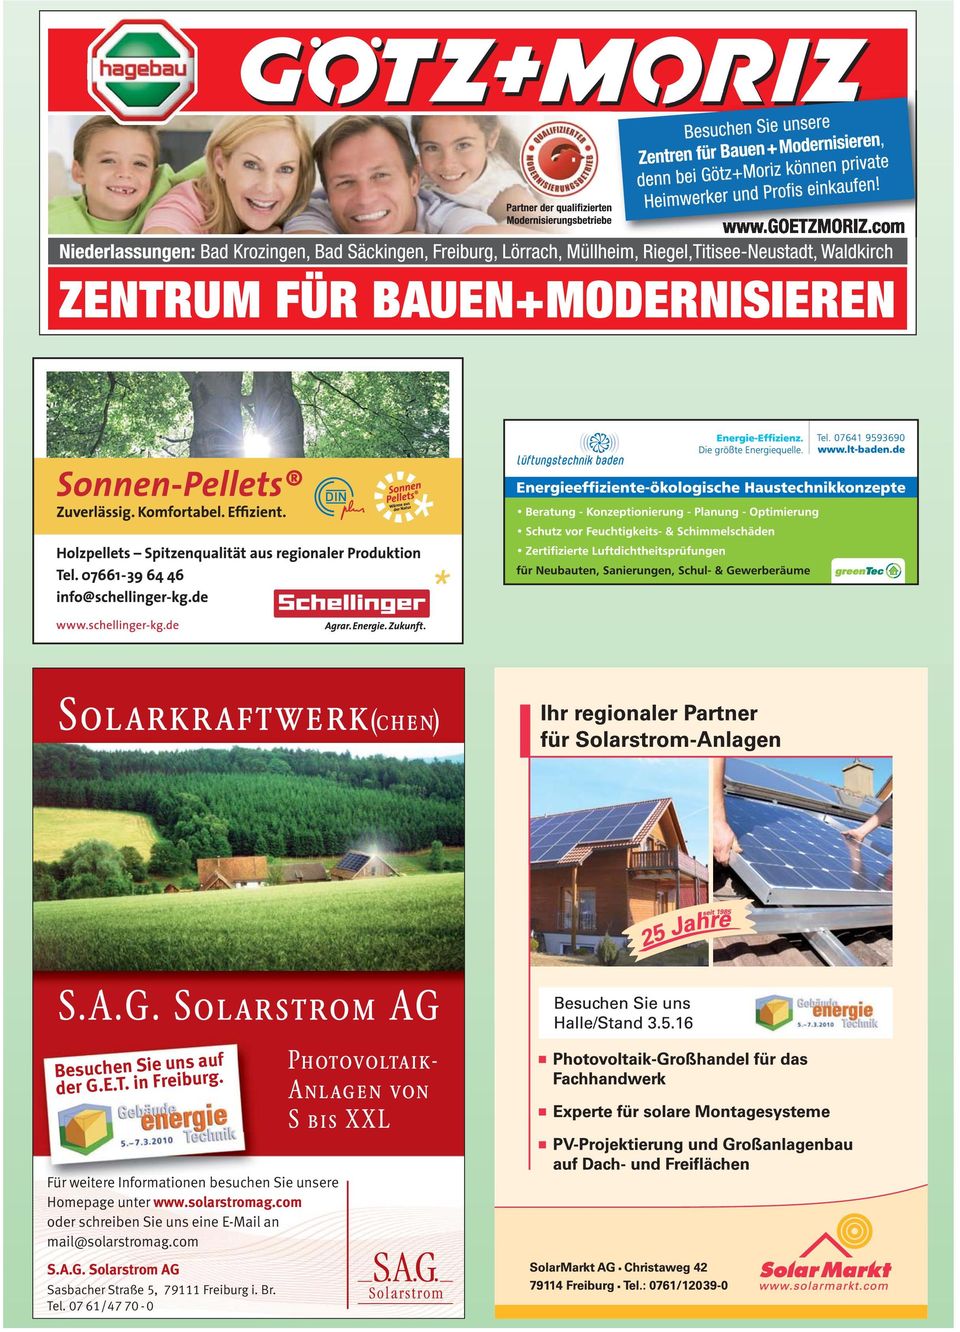 Homepage unter www.solarstromag.